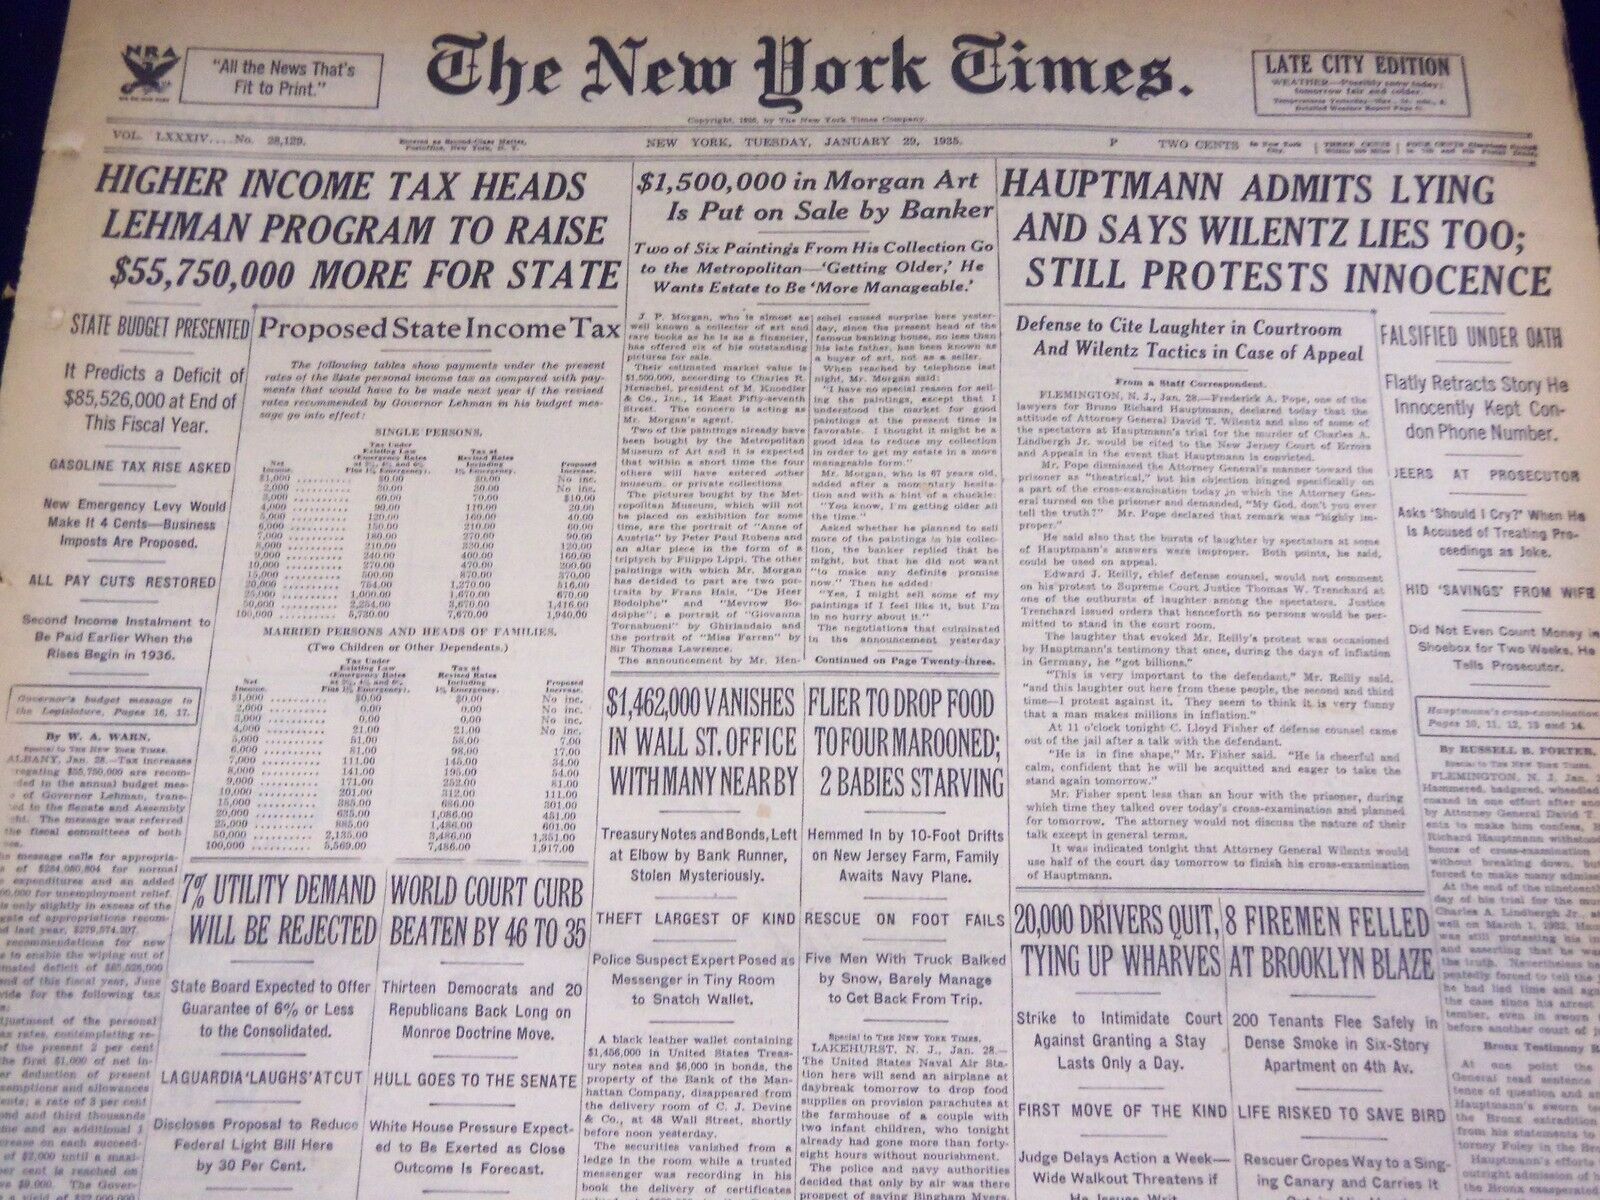 1935 JAN 29 NEW YORK TIMES - HAUPTMANN ADMITS LYING, SAYS WILENTZ LIES - NT 1948